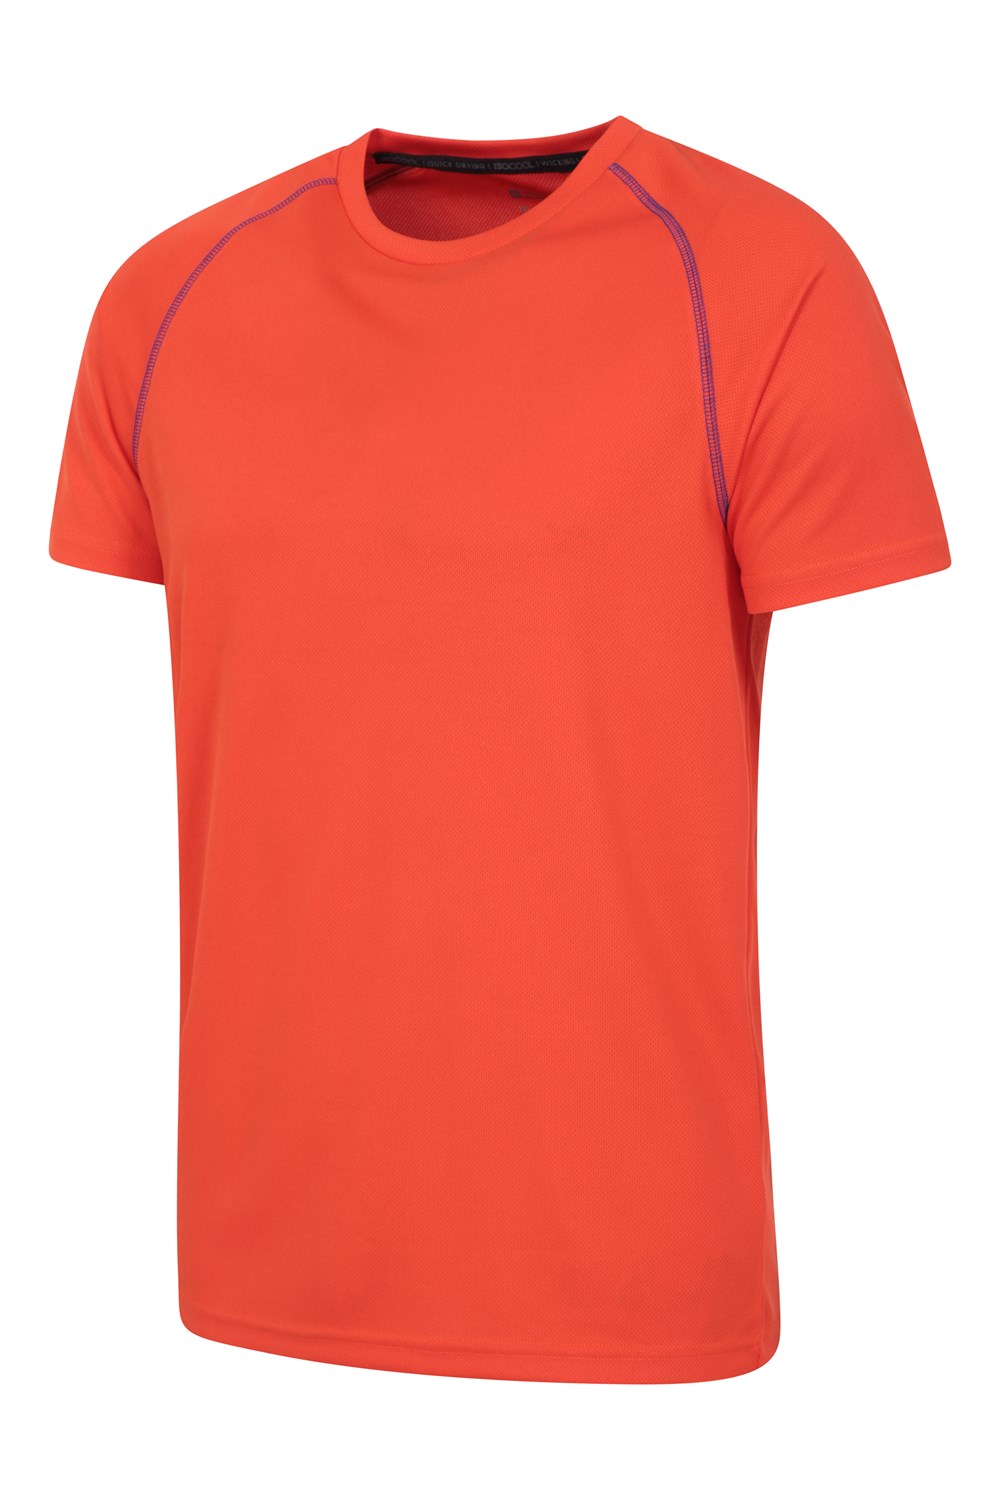 Mountain Warehouse Mens Sports Tshirt Tee UV Protection Gym Running ...